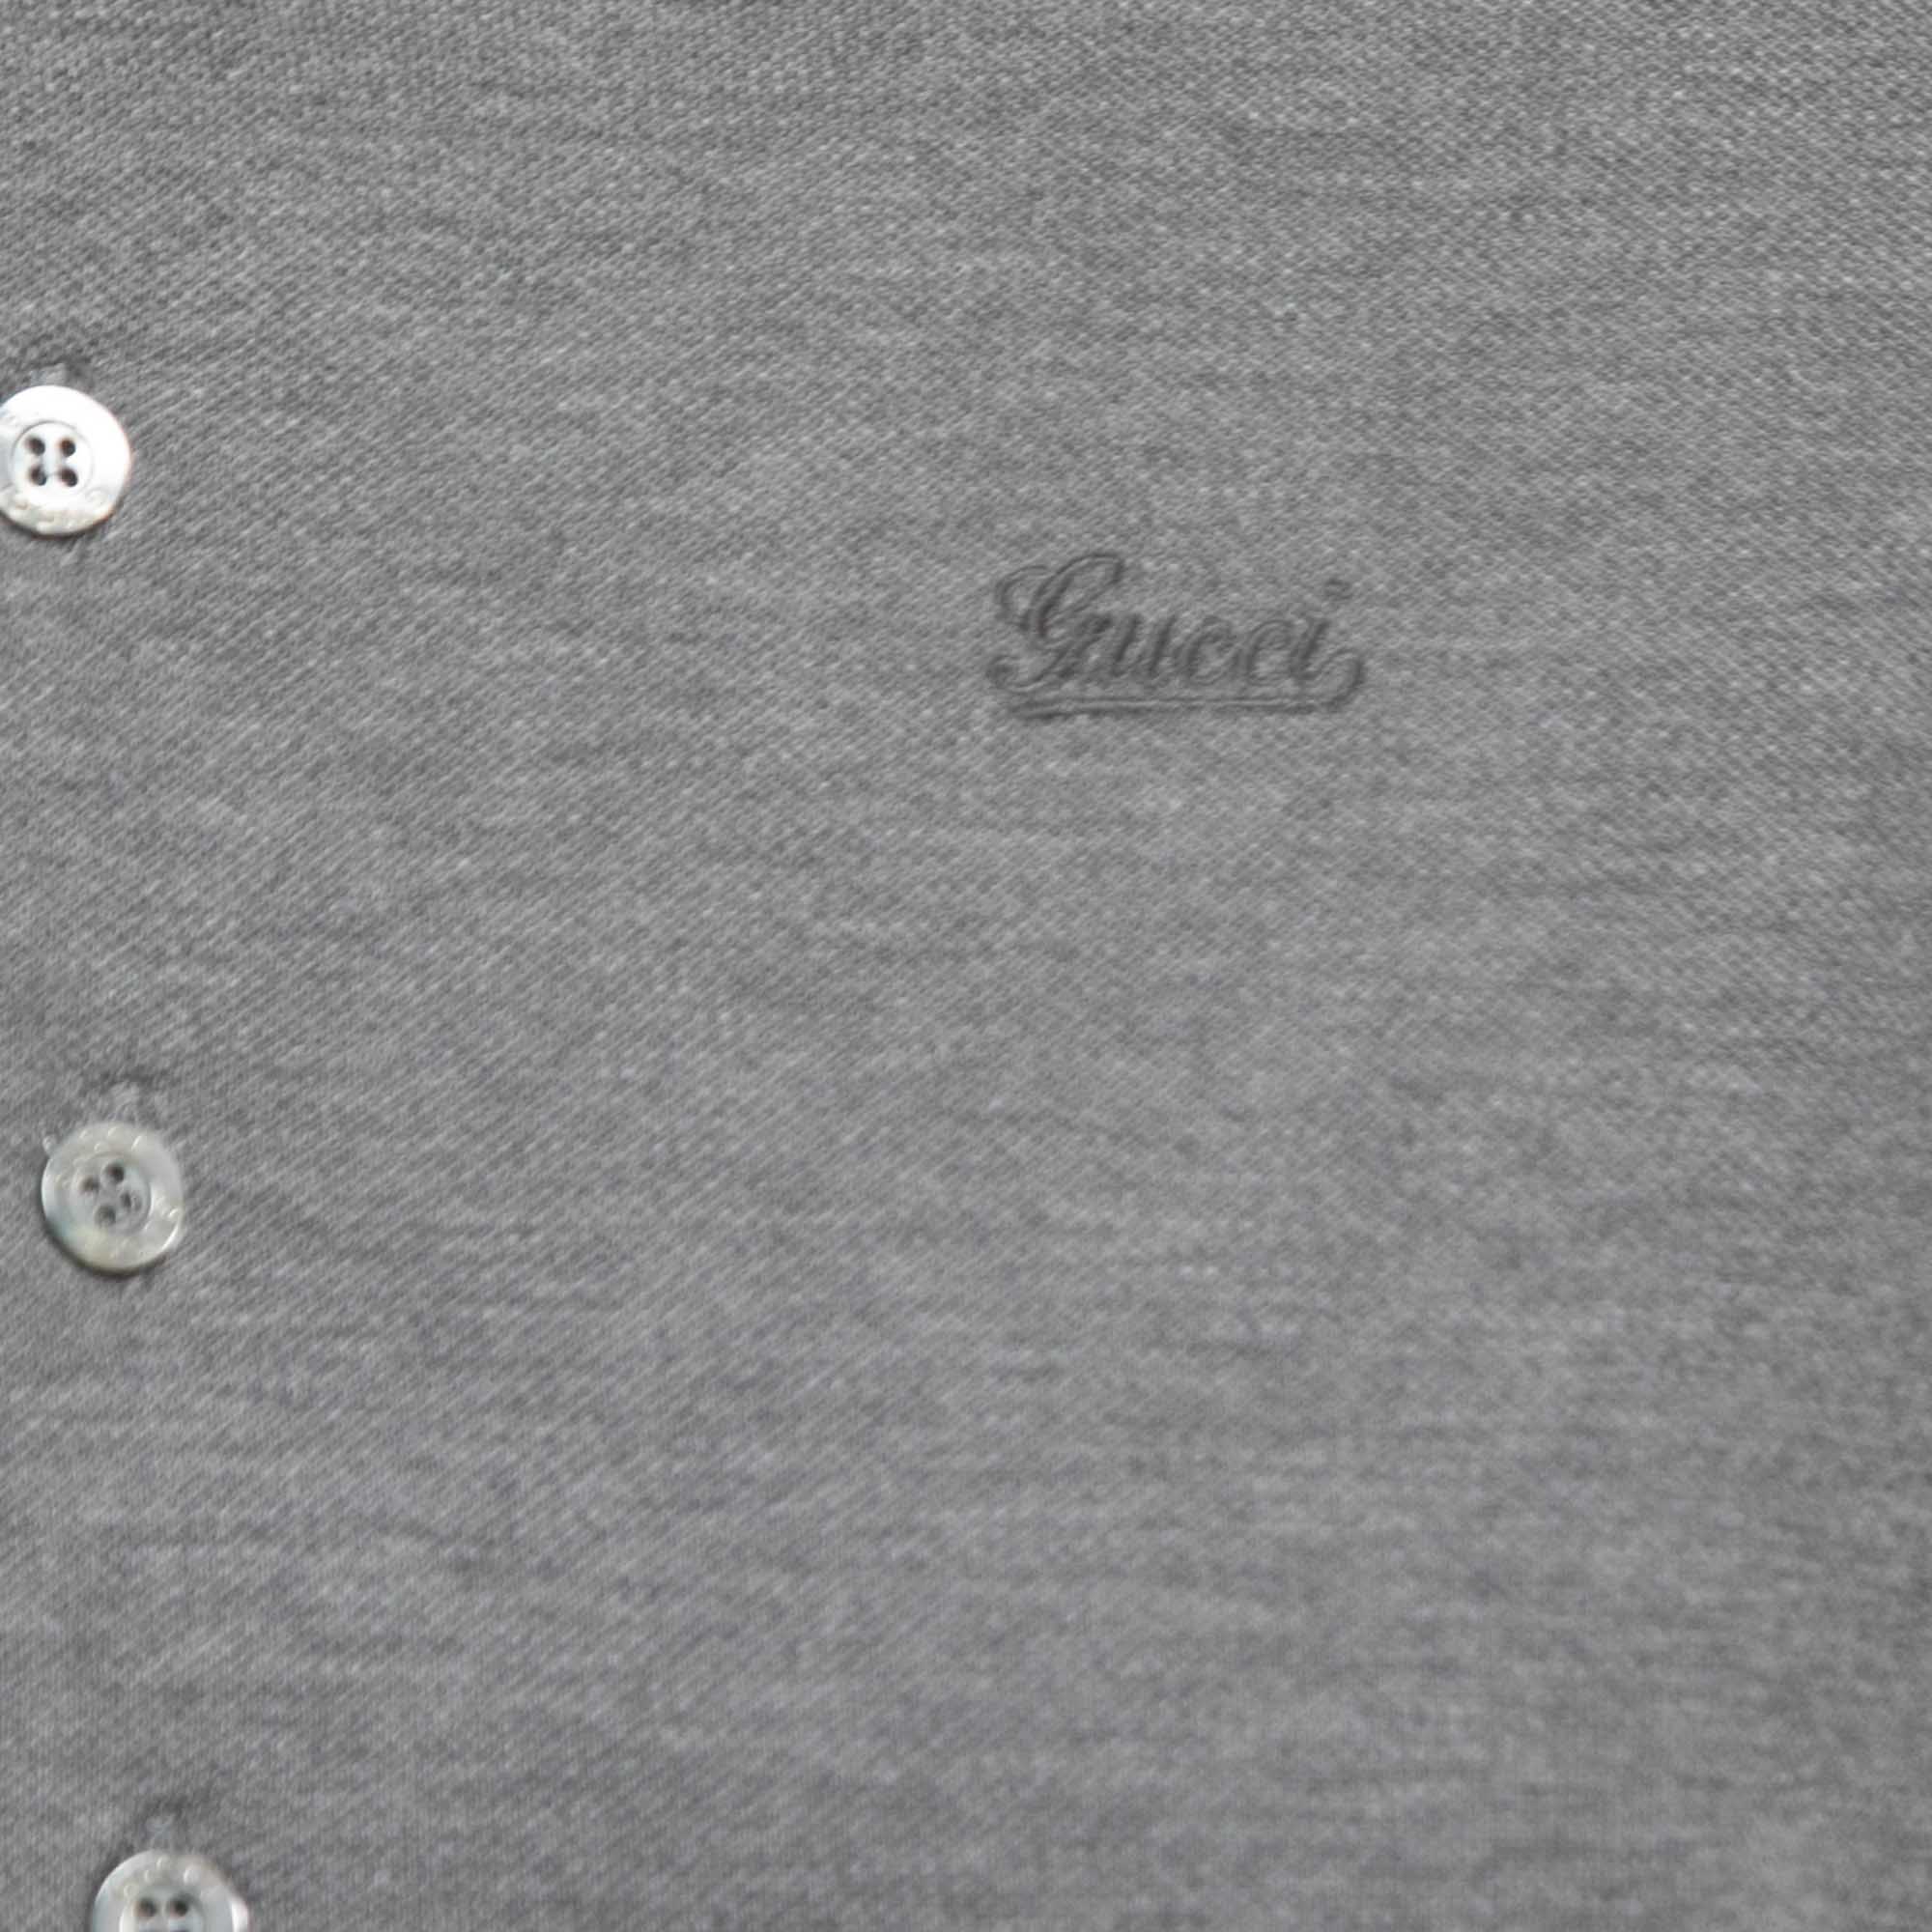 Gucci Grey Cotton Web Detailed Polo T-Shirt M